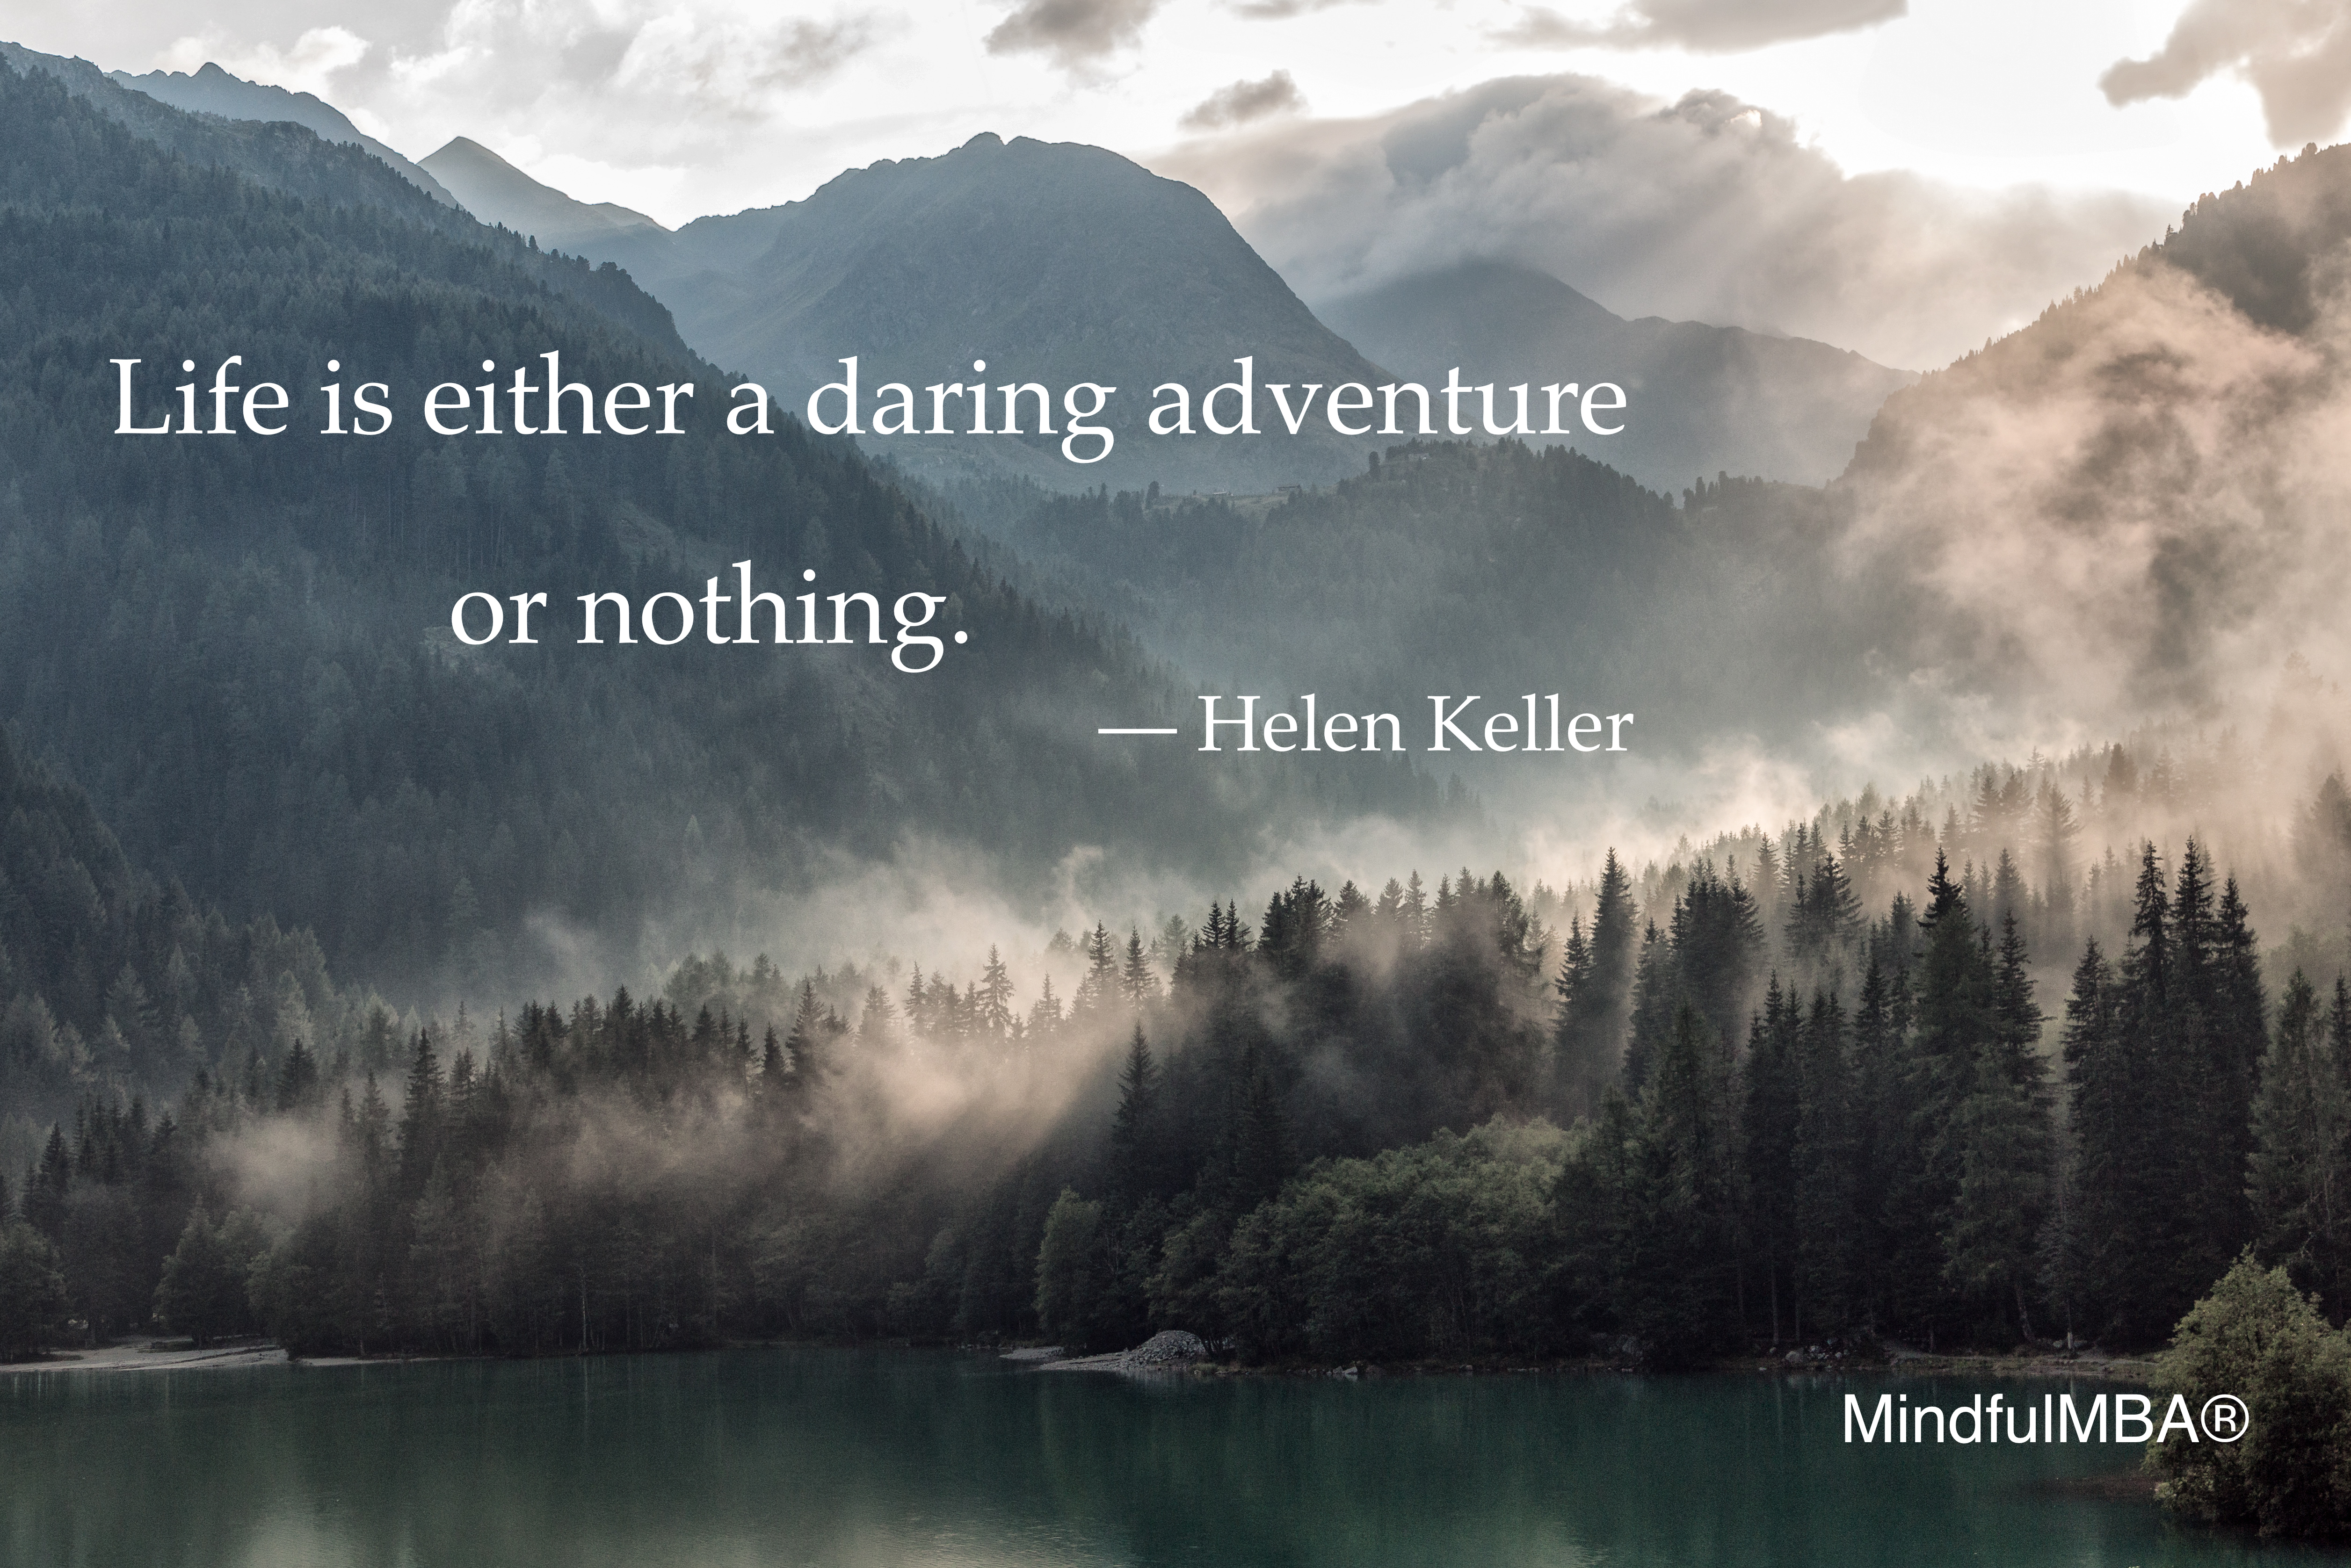 H Keller daring adventure quote w tag